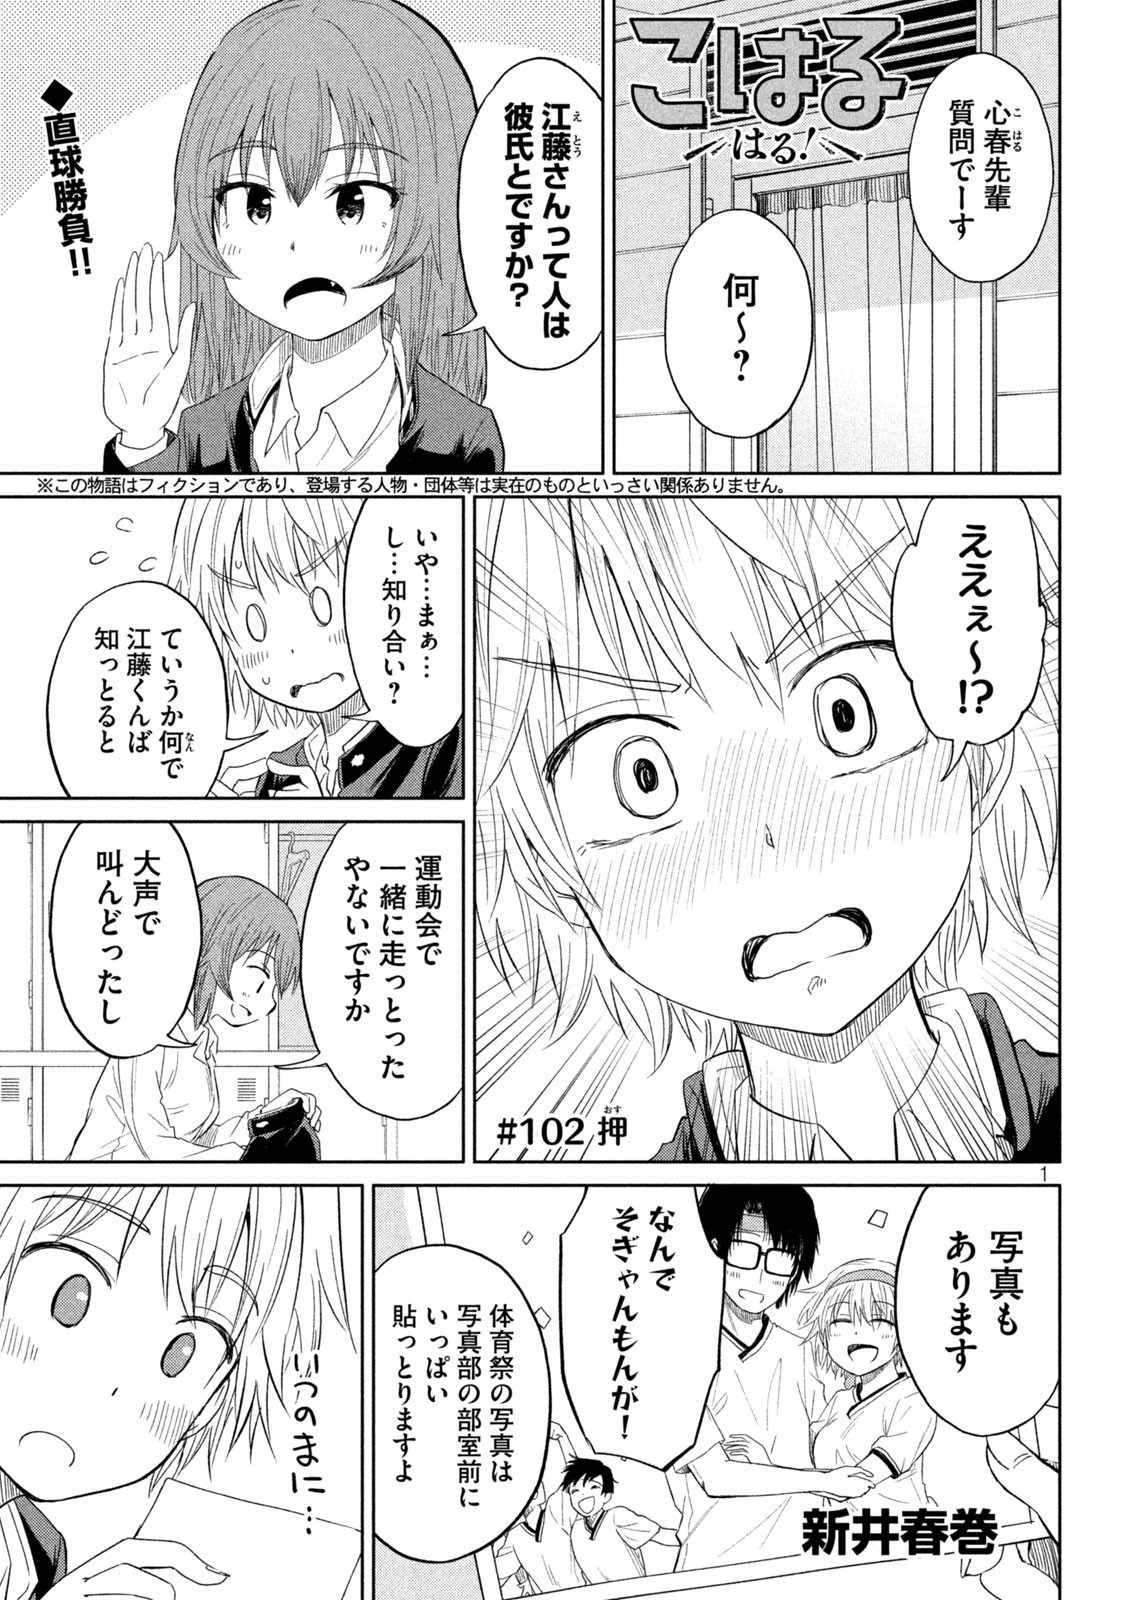 Koharu haru! - Chapter 102 - Page 1